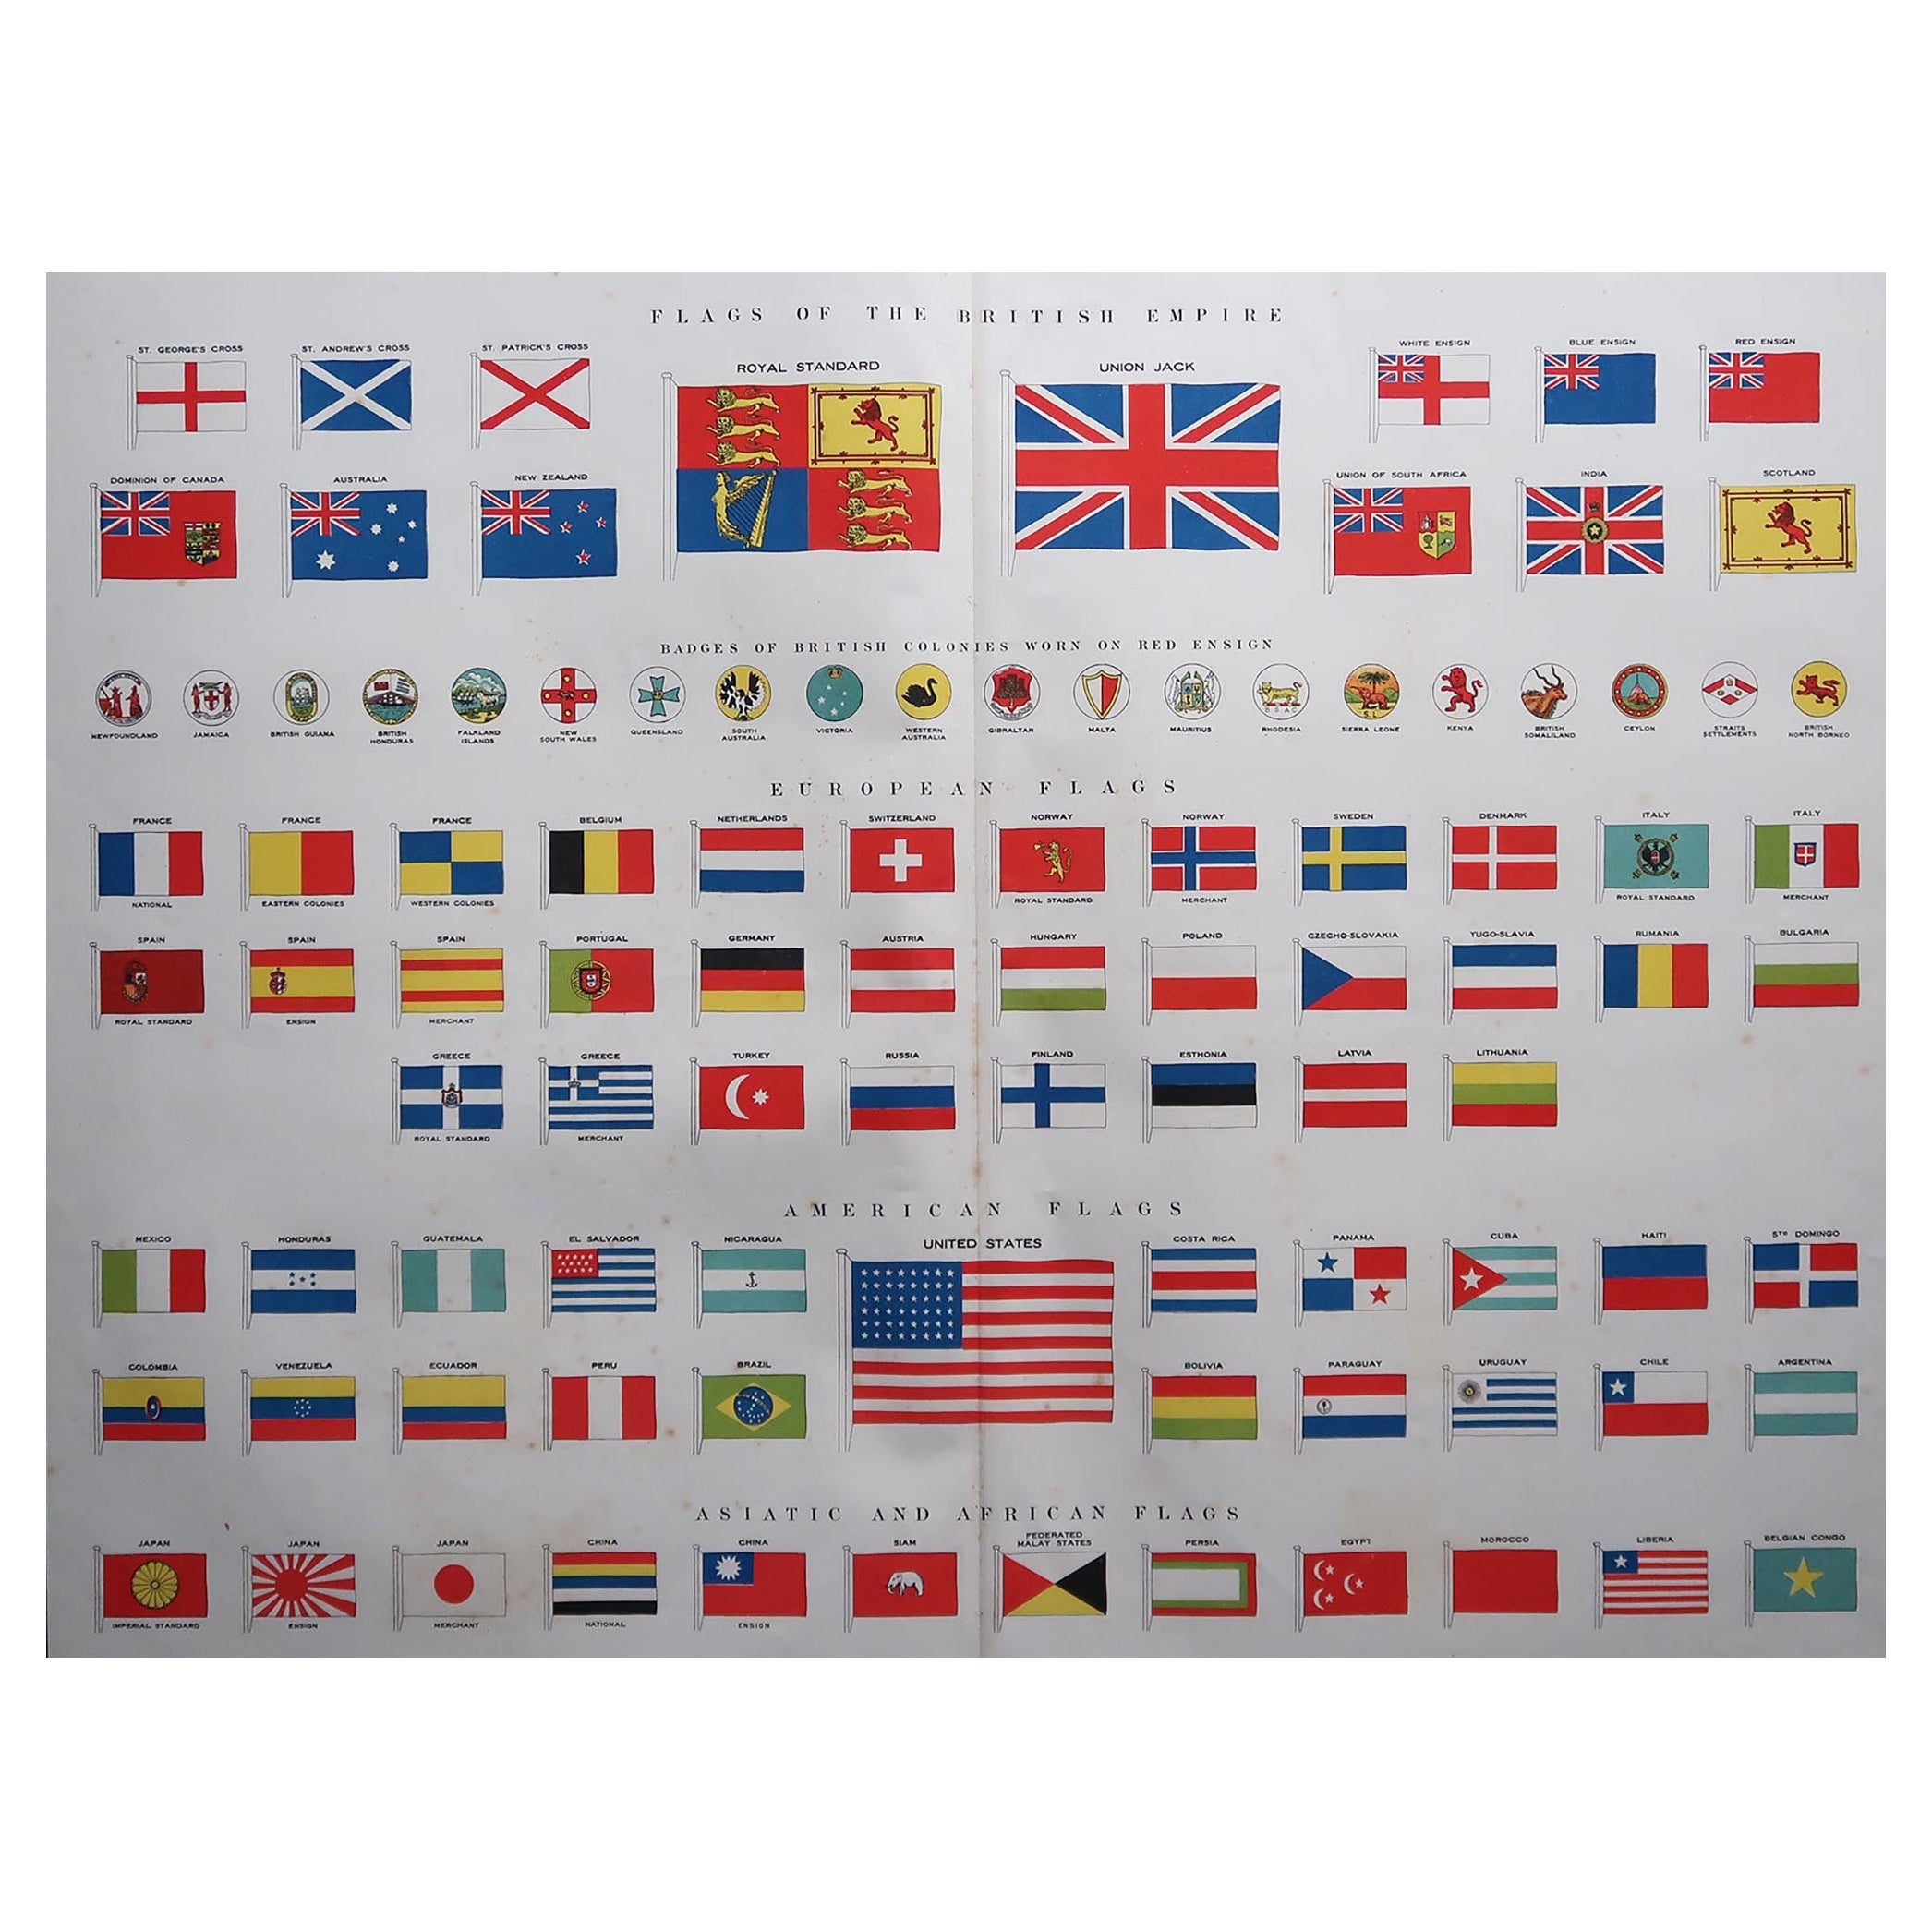 Large Original Vintage Poster of World Flags, circa 1920